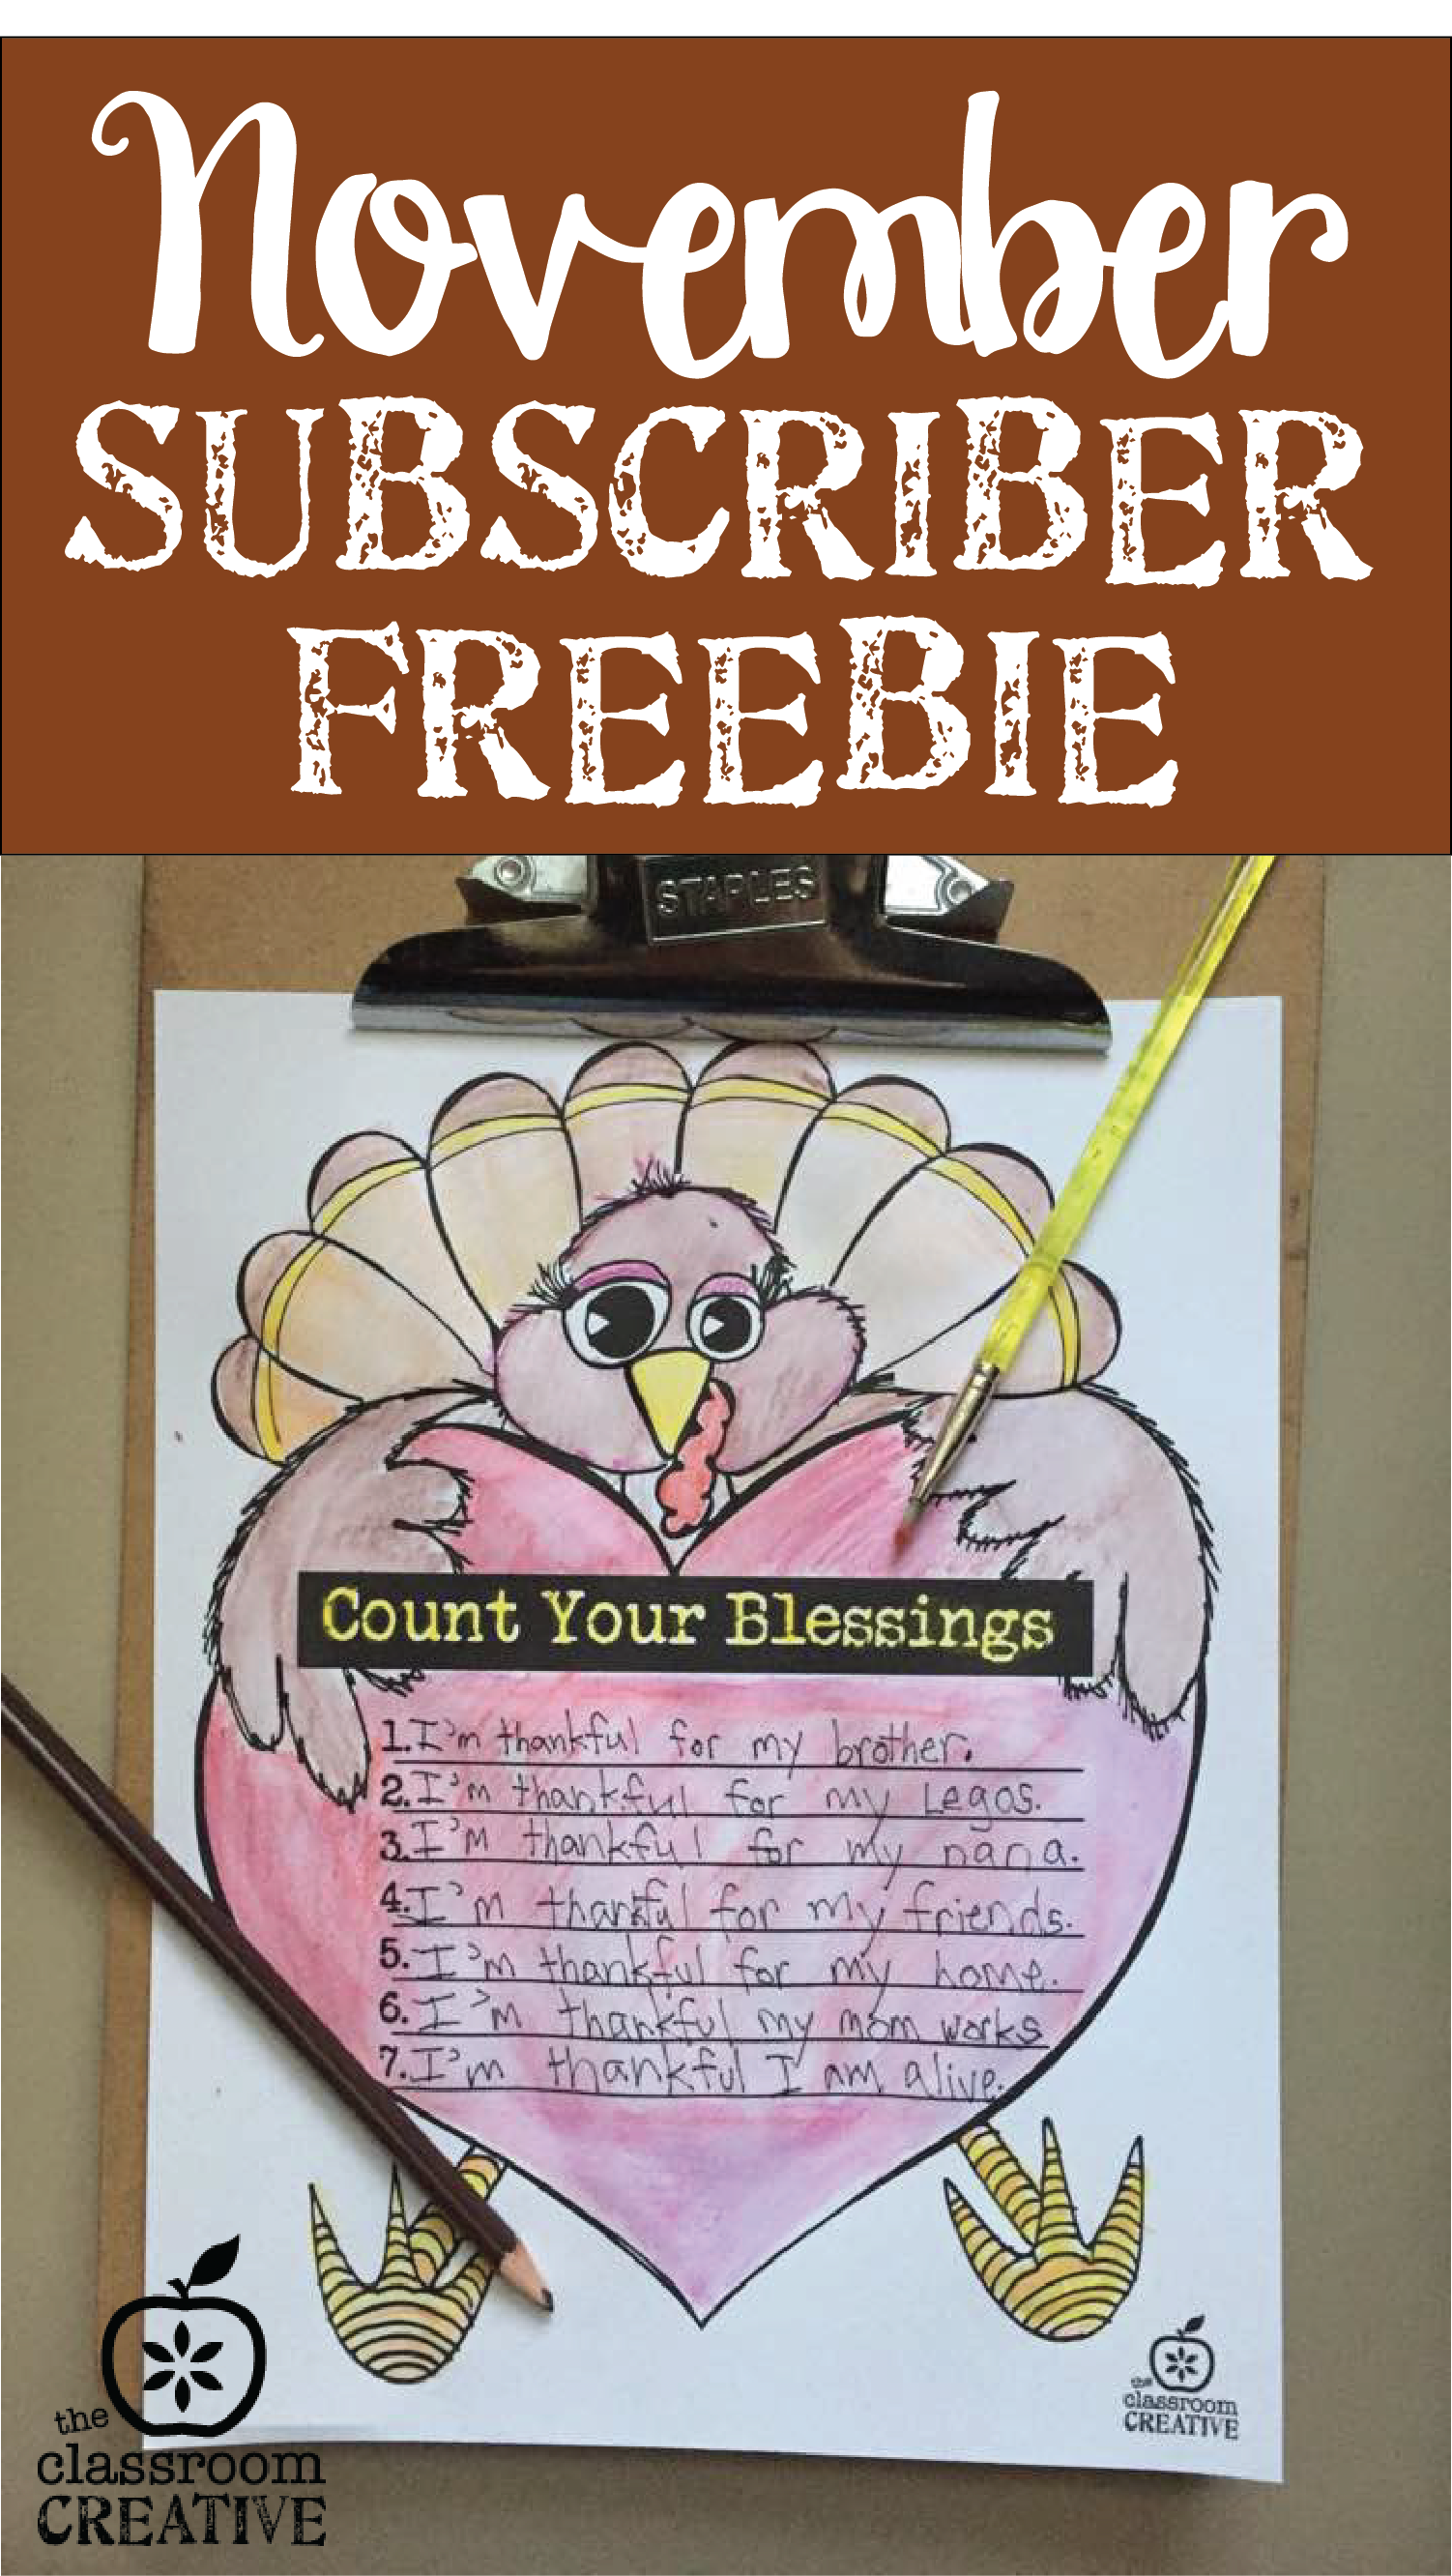 November Newsletter Subscriber Freebie: Gratitude Writing Activity